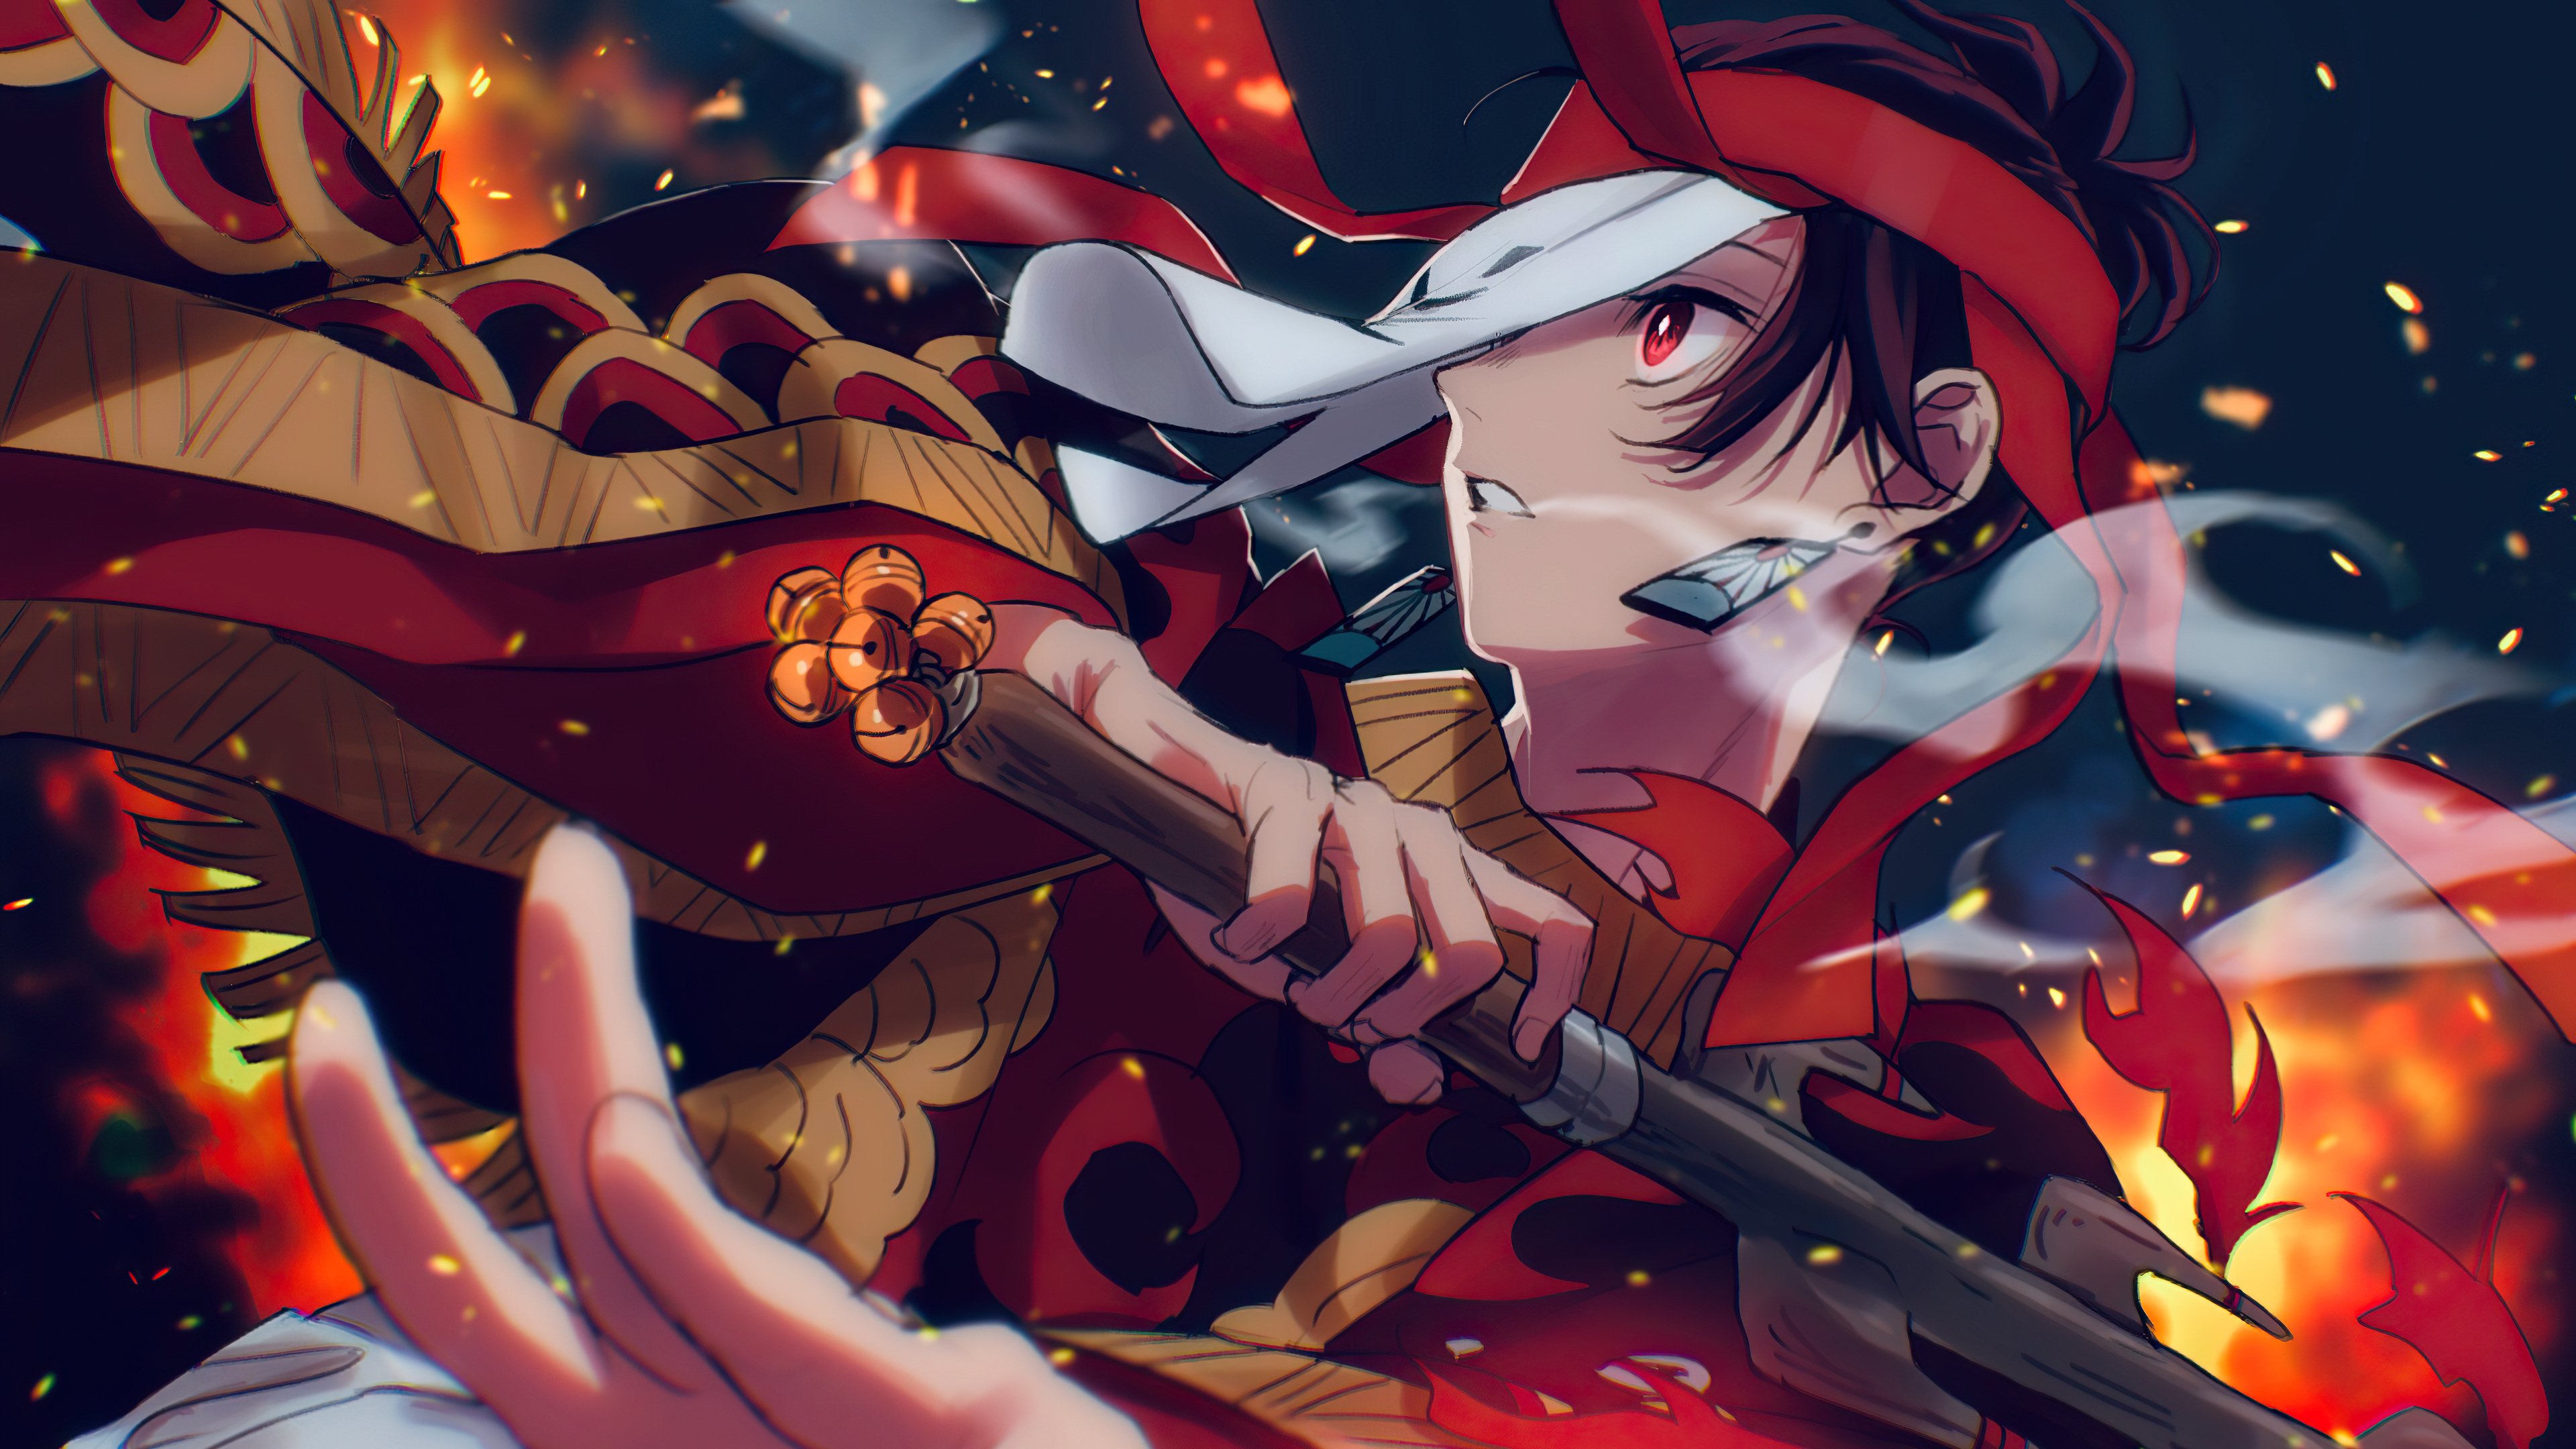 Demon Slayer Anime 4K wallpaper download